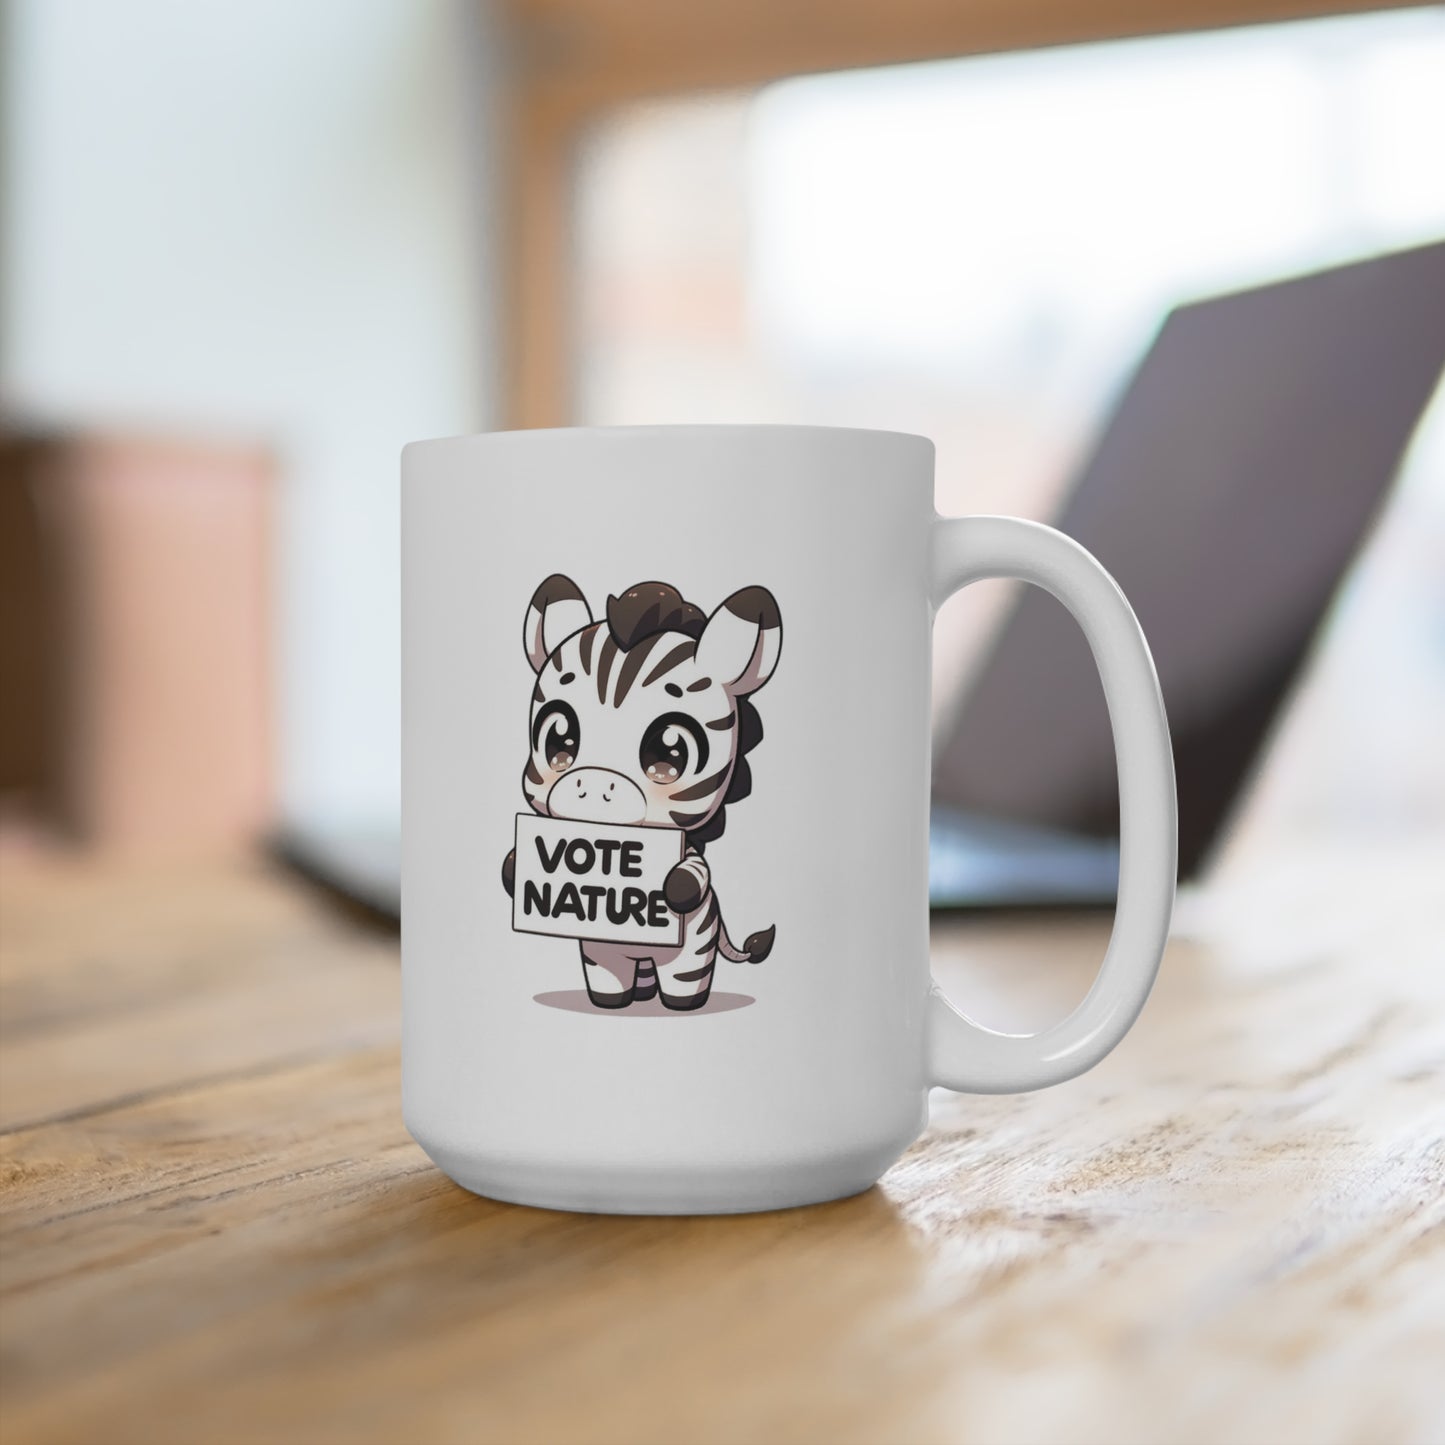 Inspirational Cute Zebra Statement Coffee Mug (15oz): Vote Nature! Be a cute activist bunny!